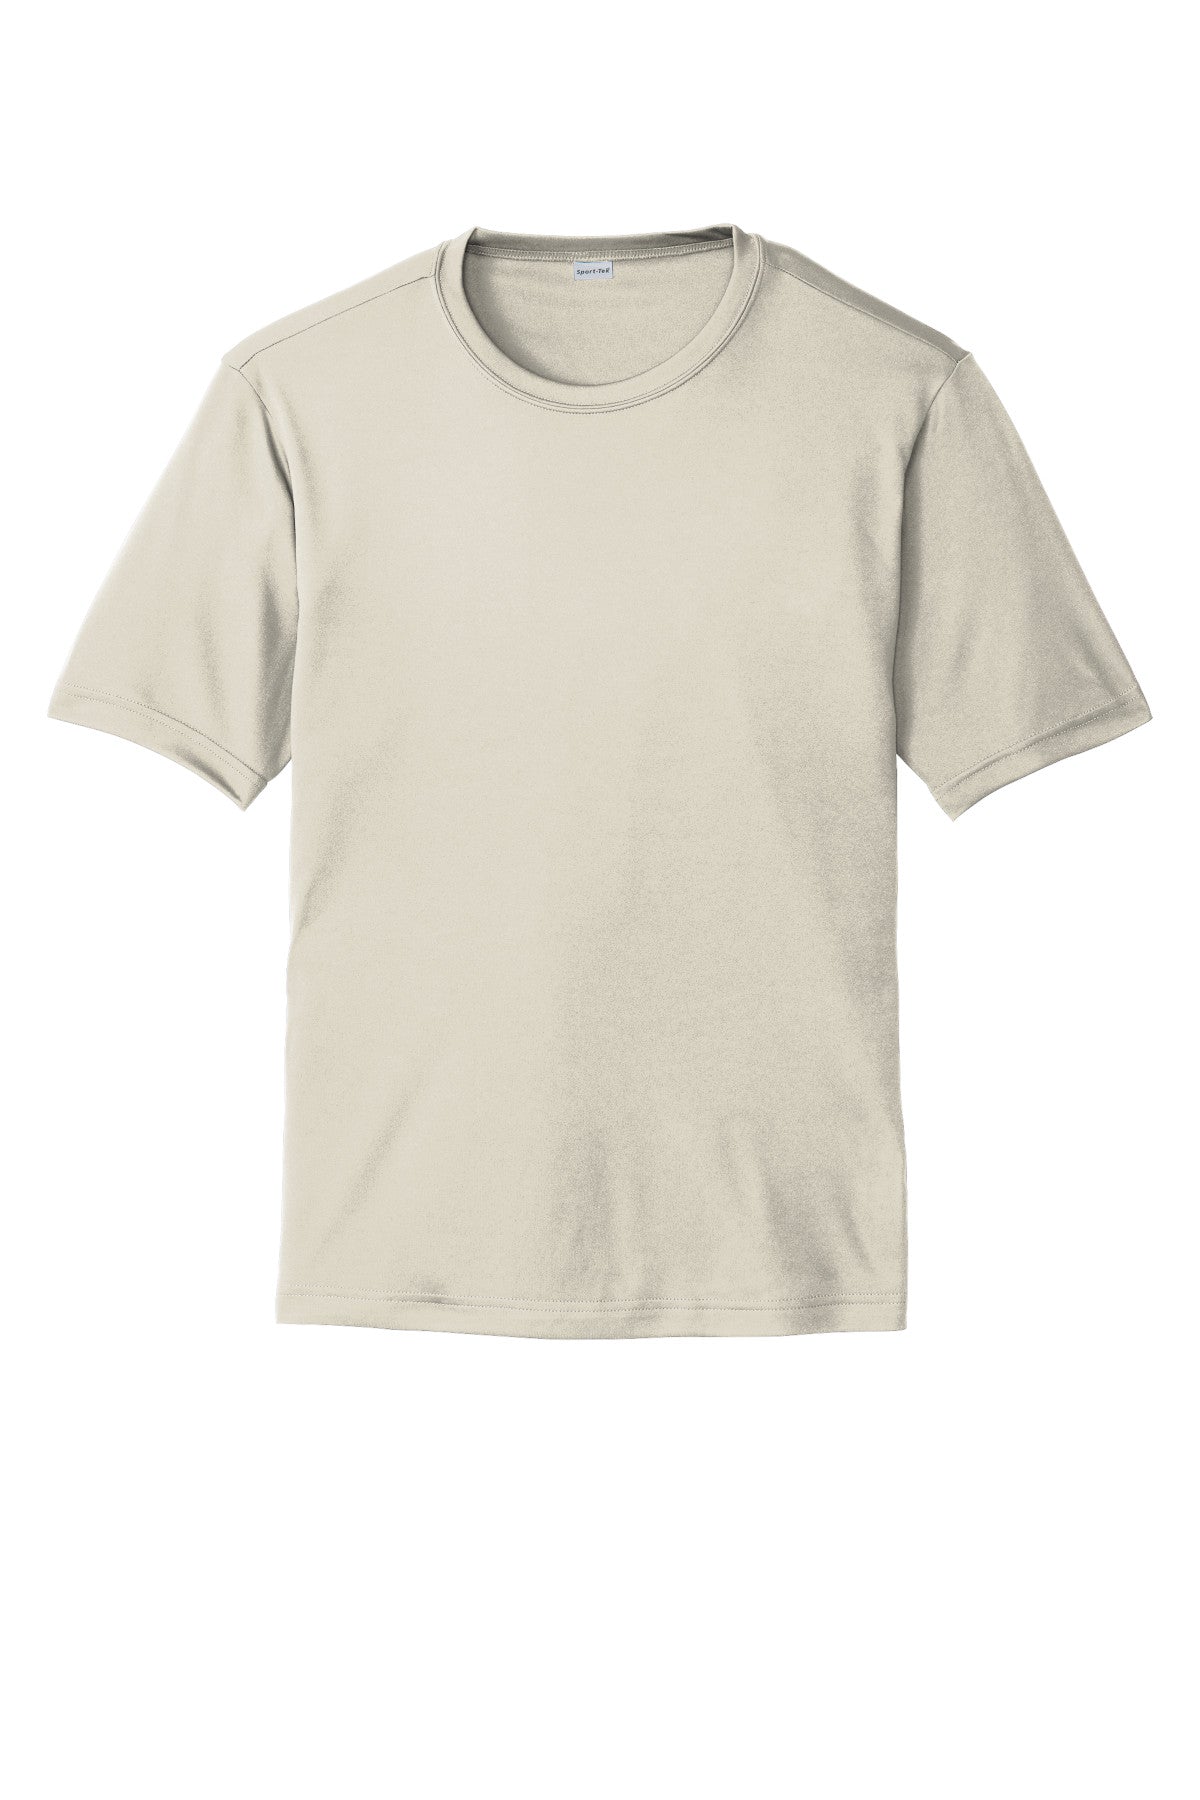 Sport-Tek St350 Polyester Adult T-Shirt Ad Small / Sand